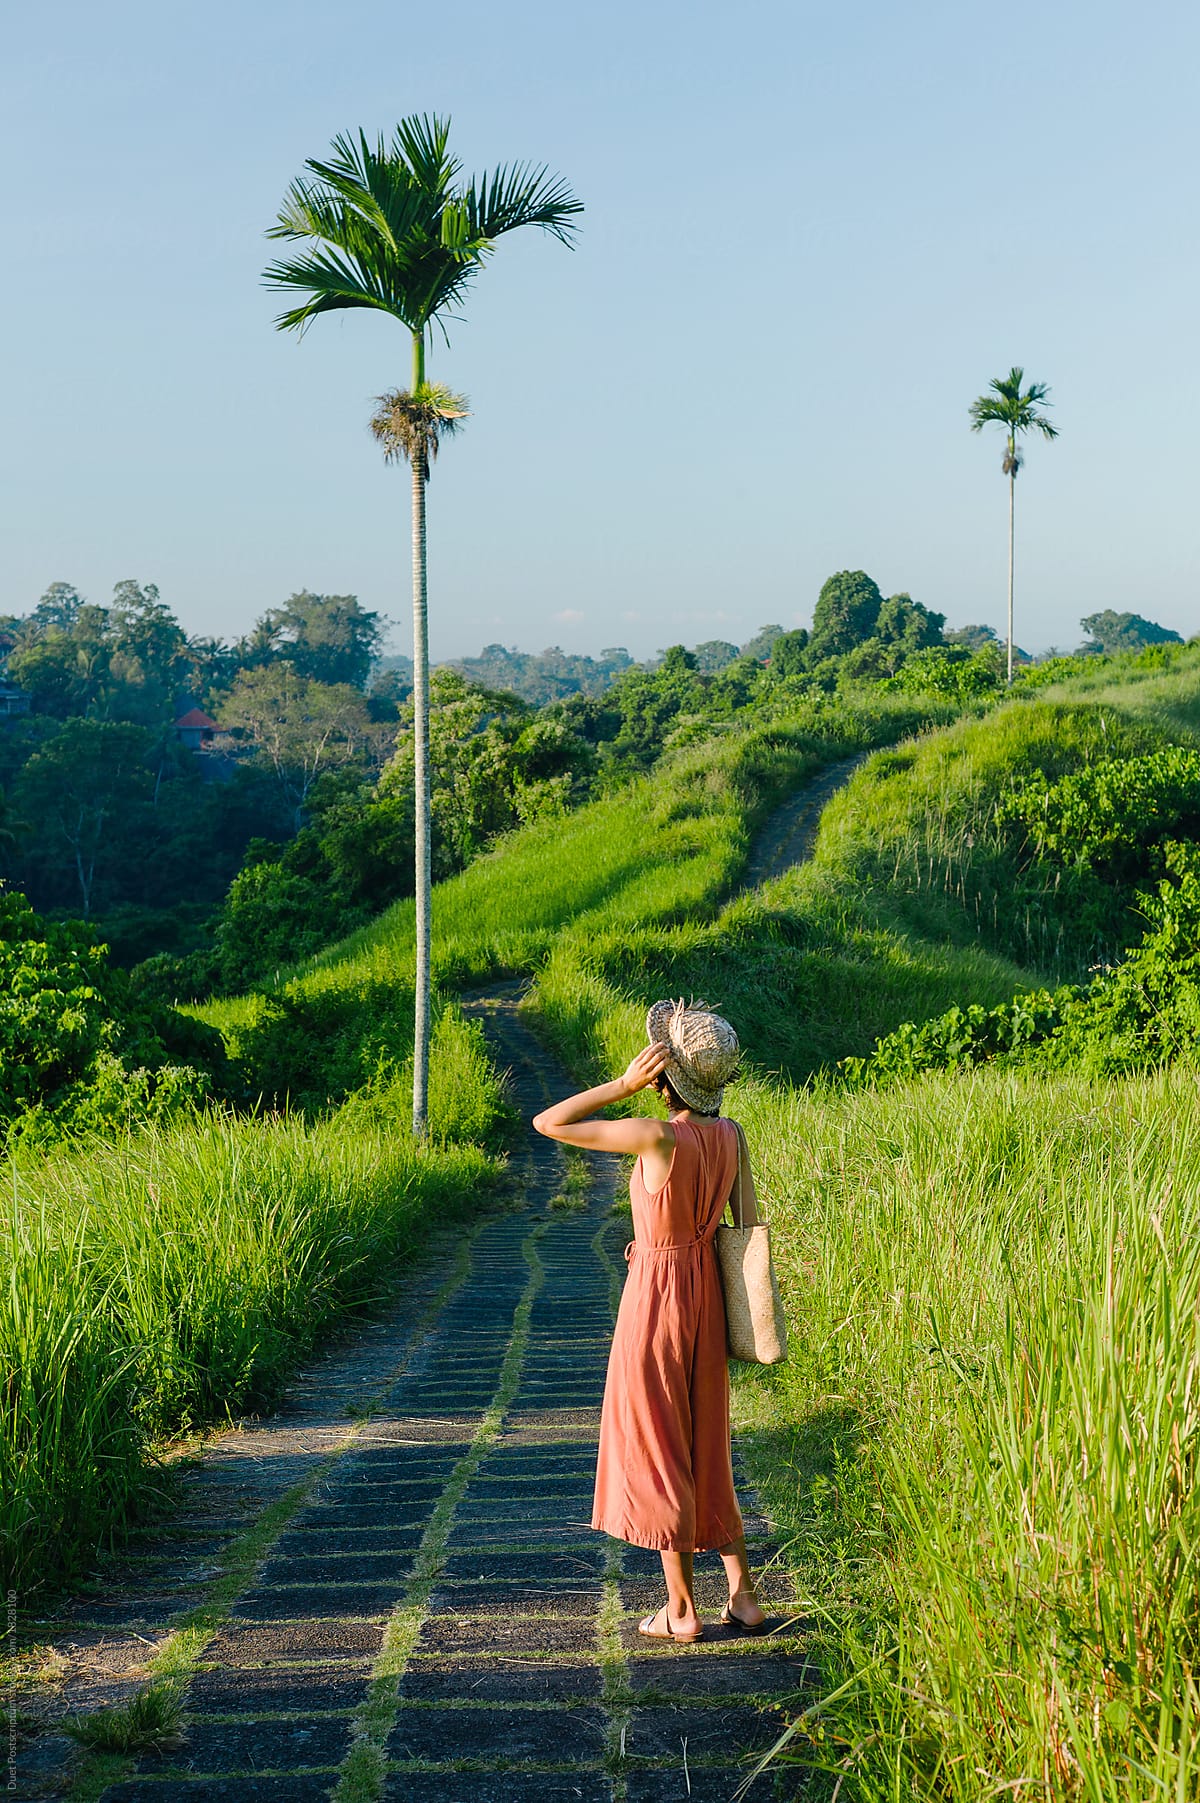 Gir walking on pathway in tropics